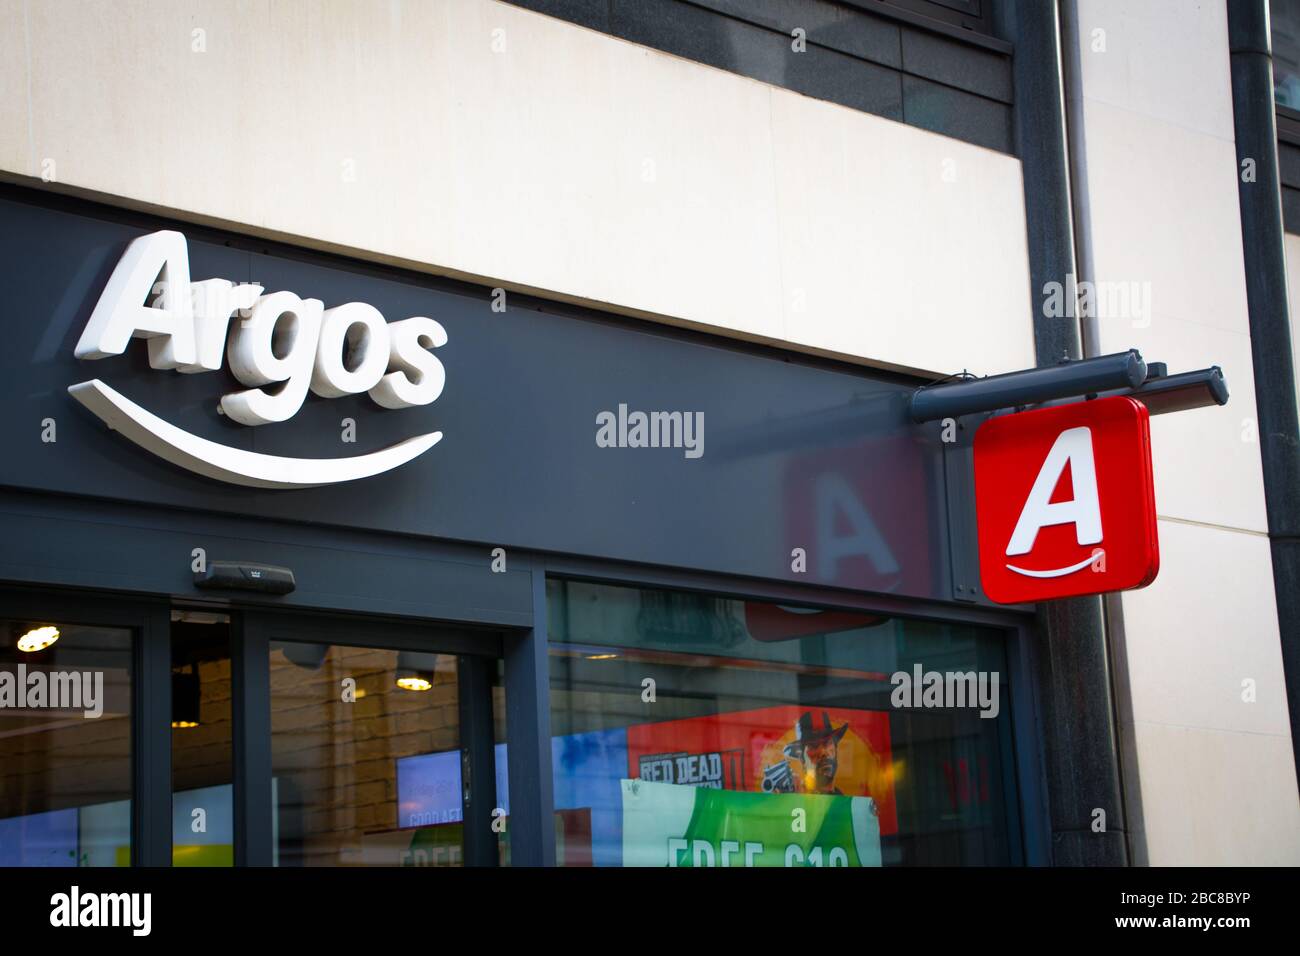 Argos store, large British high street retailer- exterior logo / signage- London Stock Photo